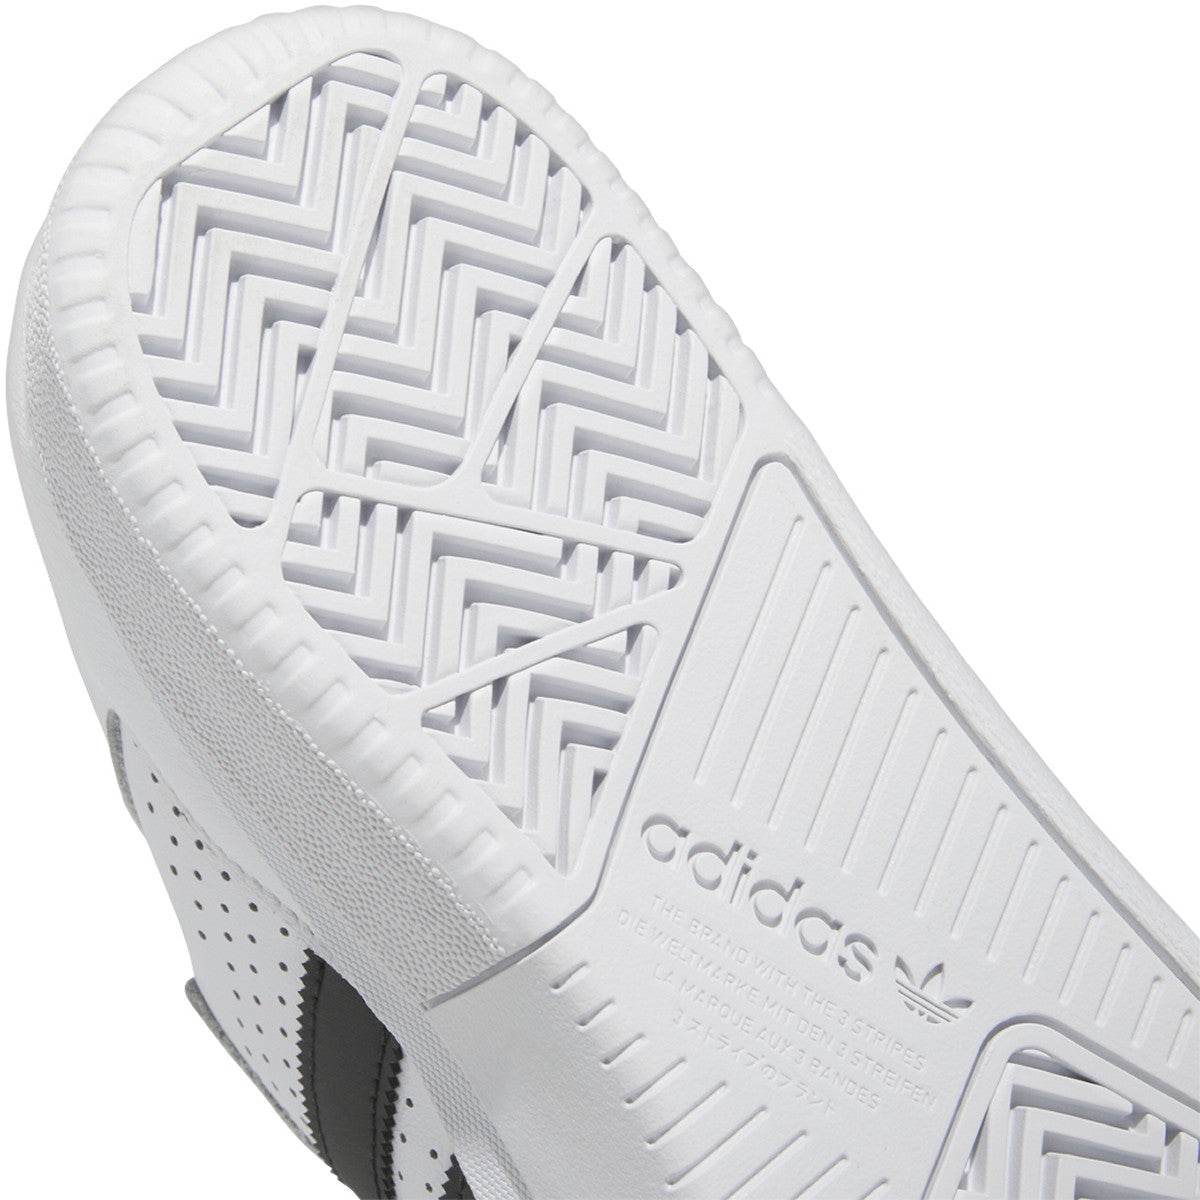 White Tyshawn Low Adidas Skateboard Shoe Detail